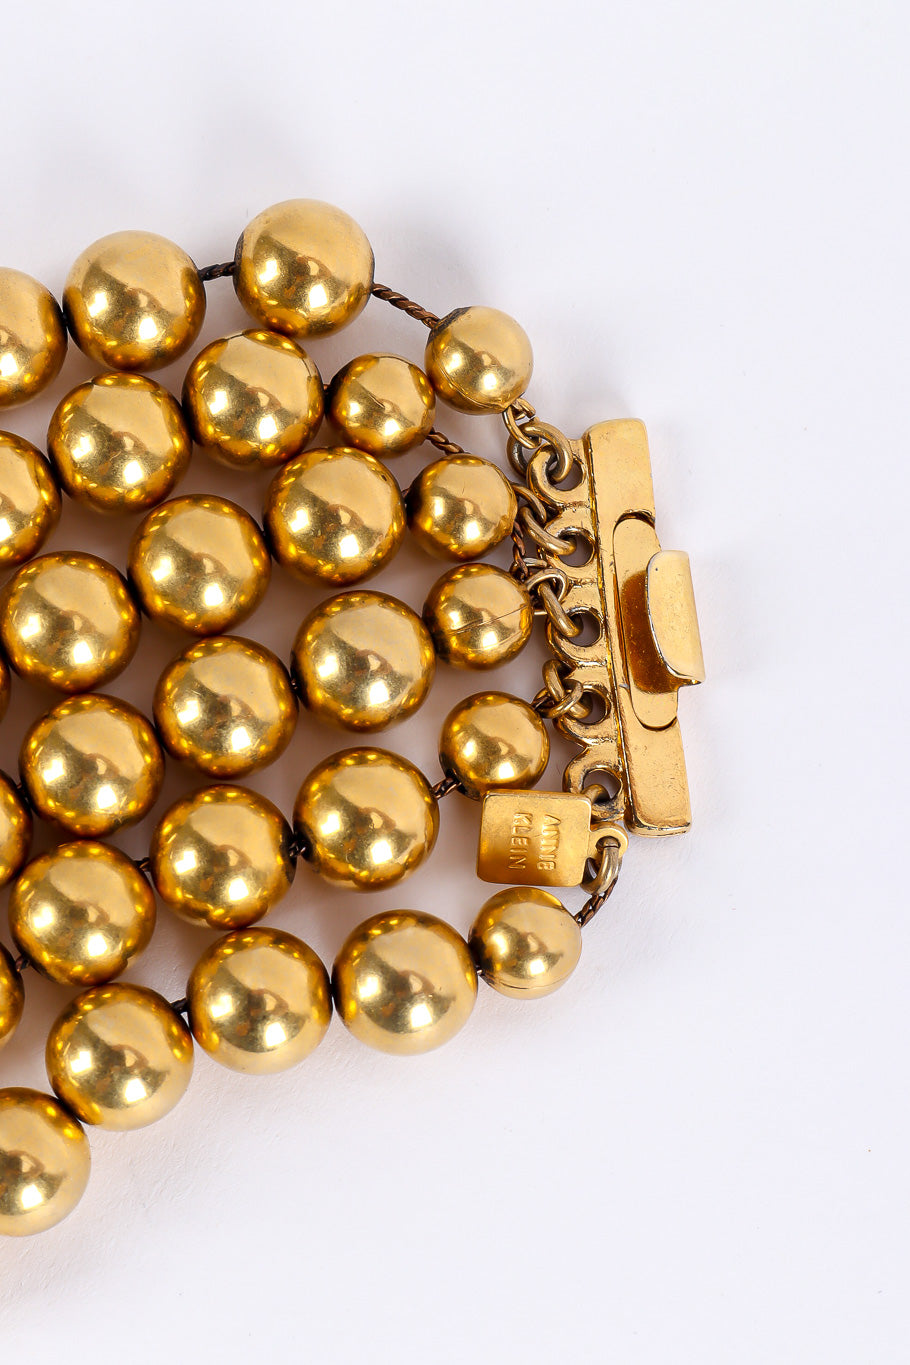 Multi-strand ball chain collar necklace by Anne Klein clasp photo details. @recessla